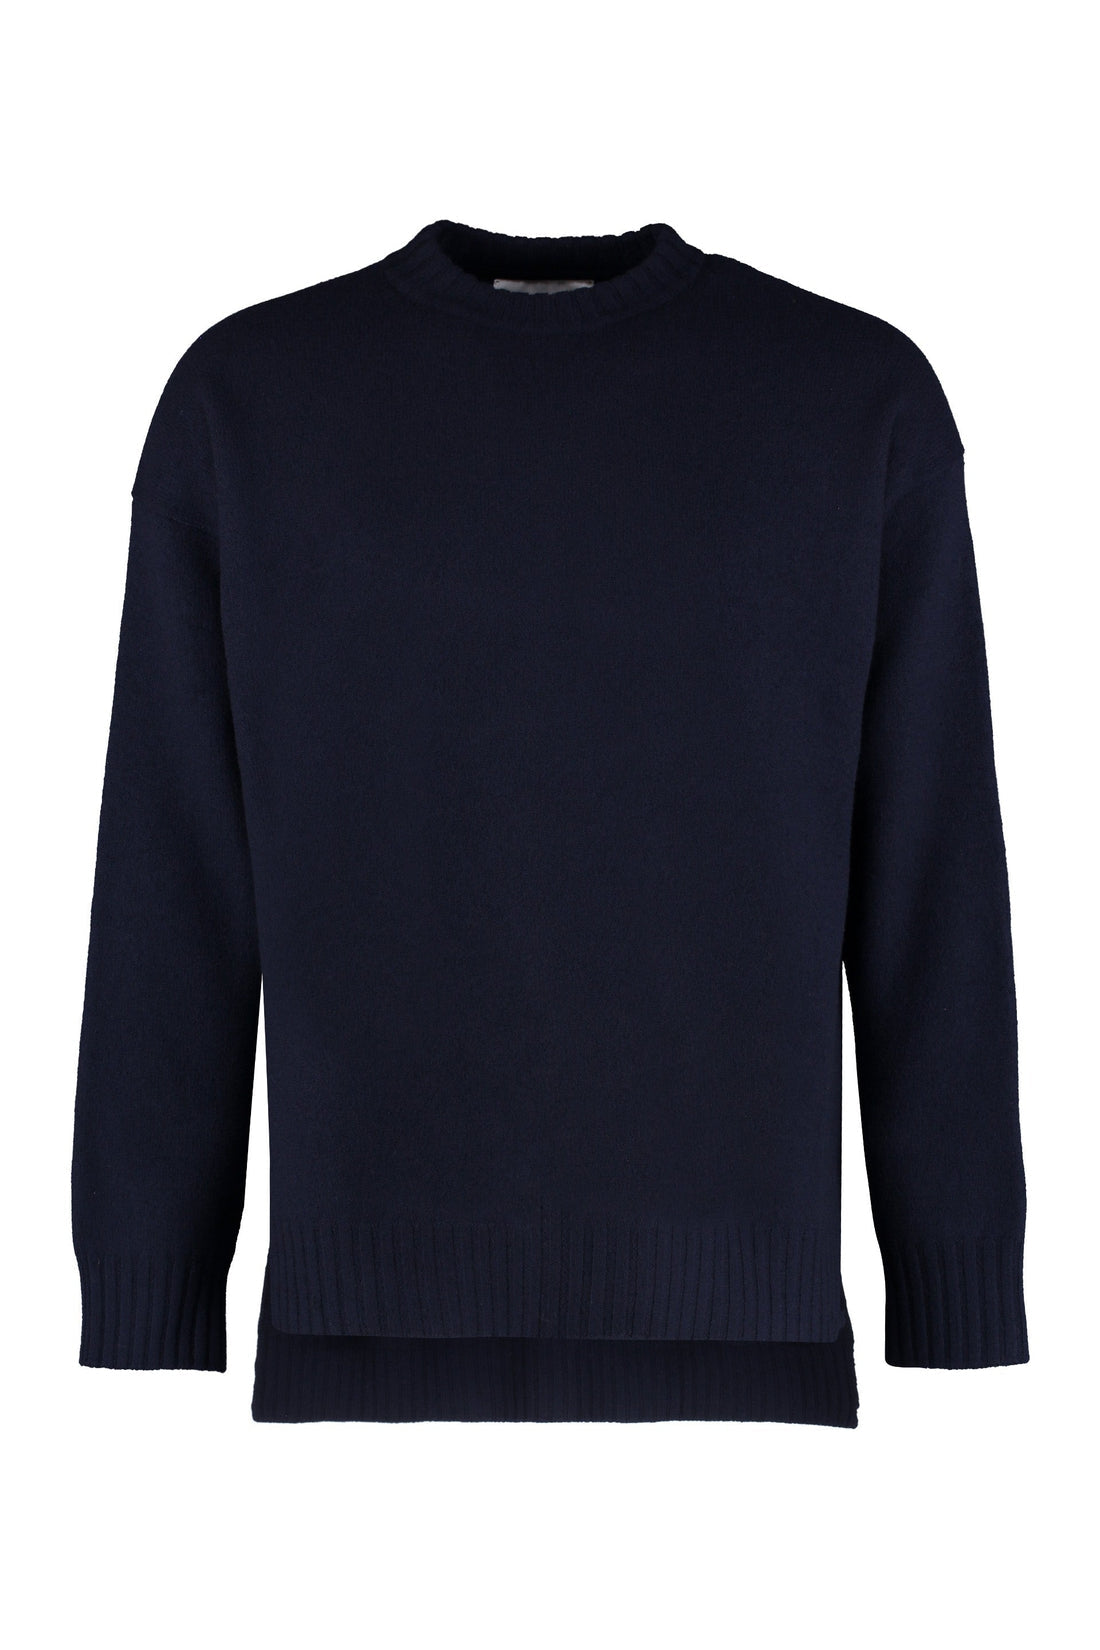 Jil Sander-OUTLET-SALE-Long sleeve crew-neck sweater-ARCHIVIST